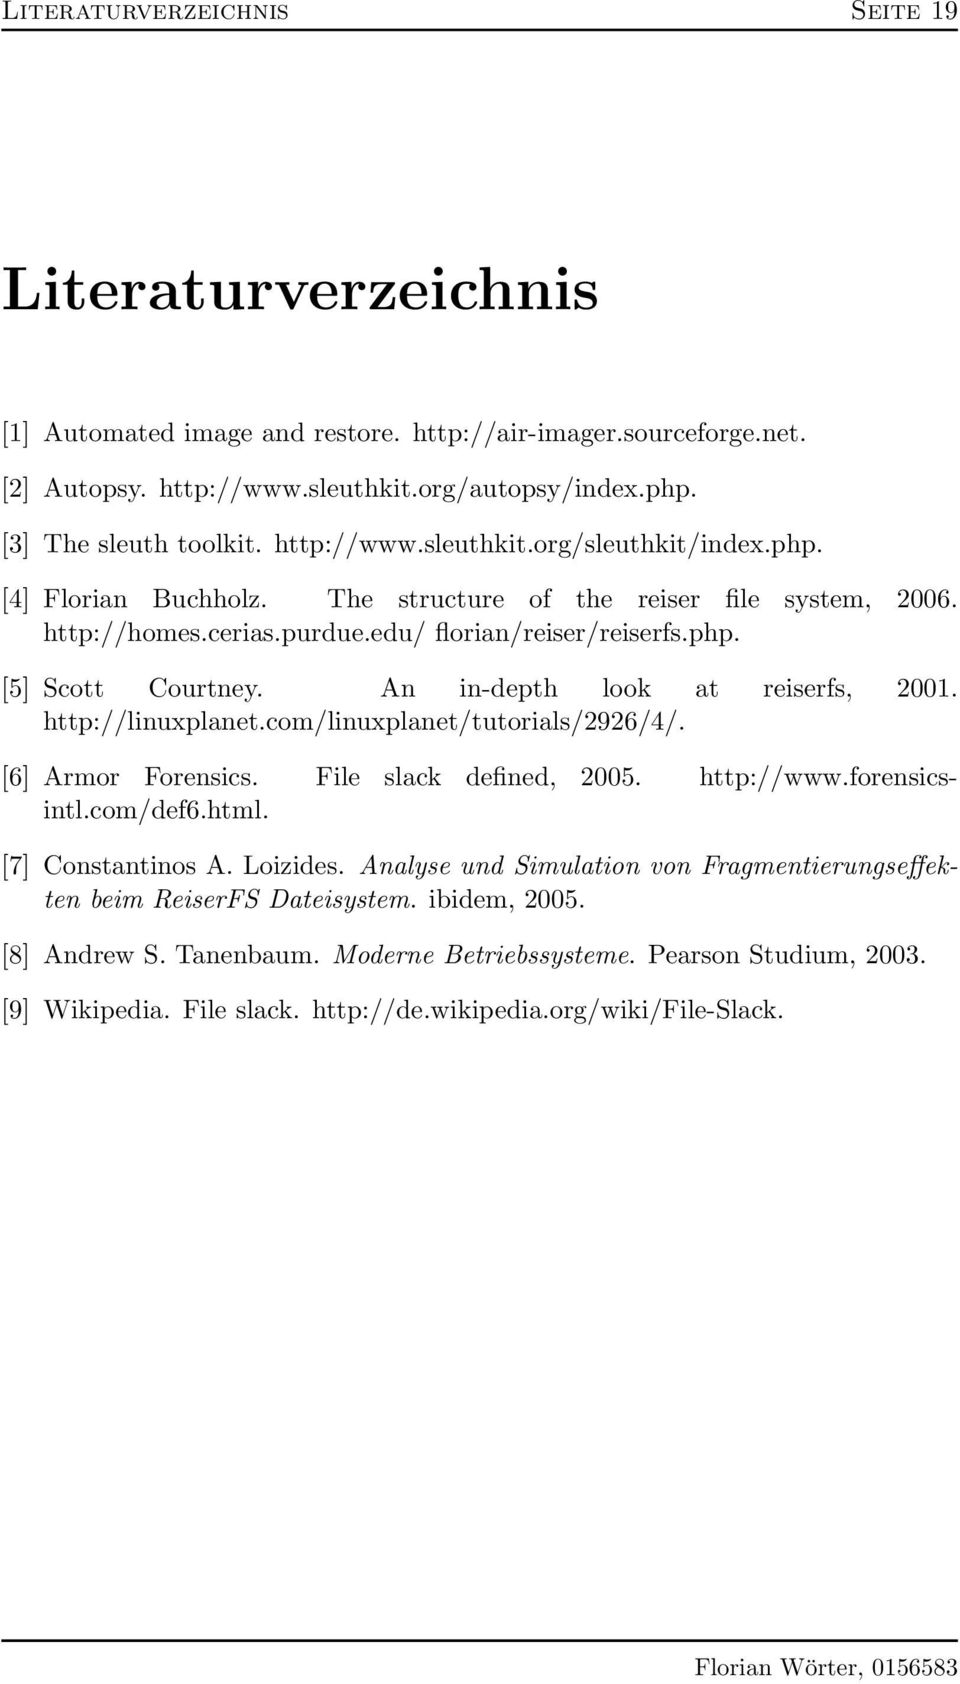 An in-depth look at reiserfs, 2001. http://linuxplanet.com/linuxplanet/tutorials/2926/4/. [6] Armor Forensics. File slack defined, 2005. http://www.forensicsintl.com/def6.html. [7] Constantinos A.